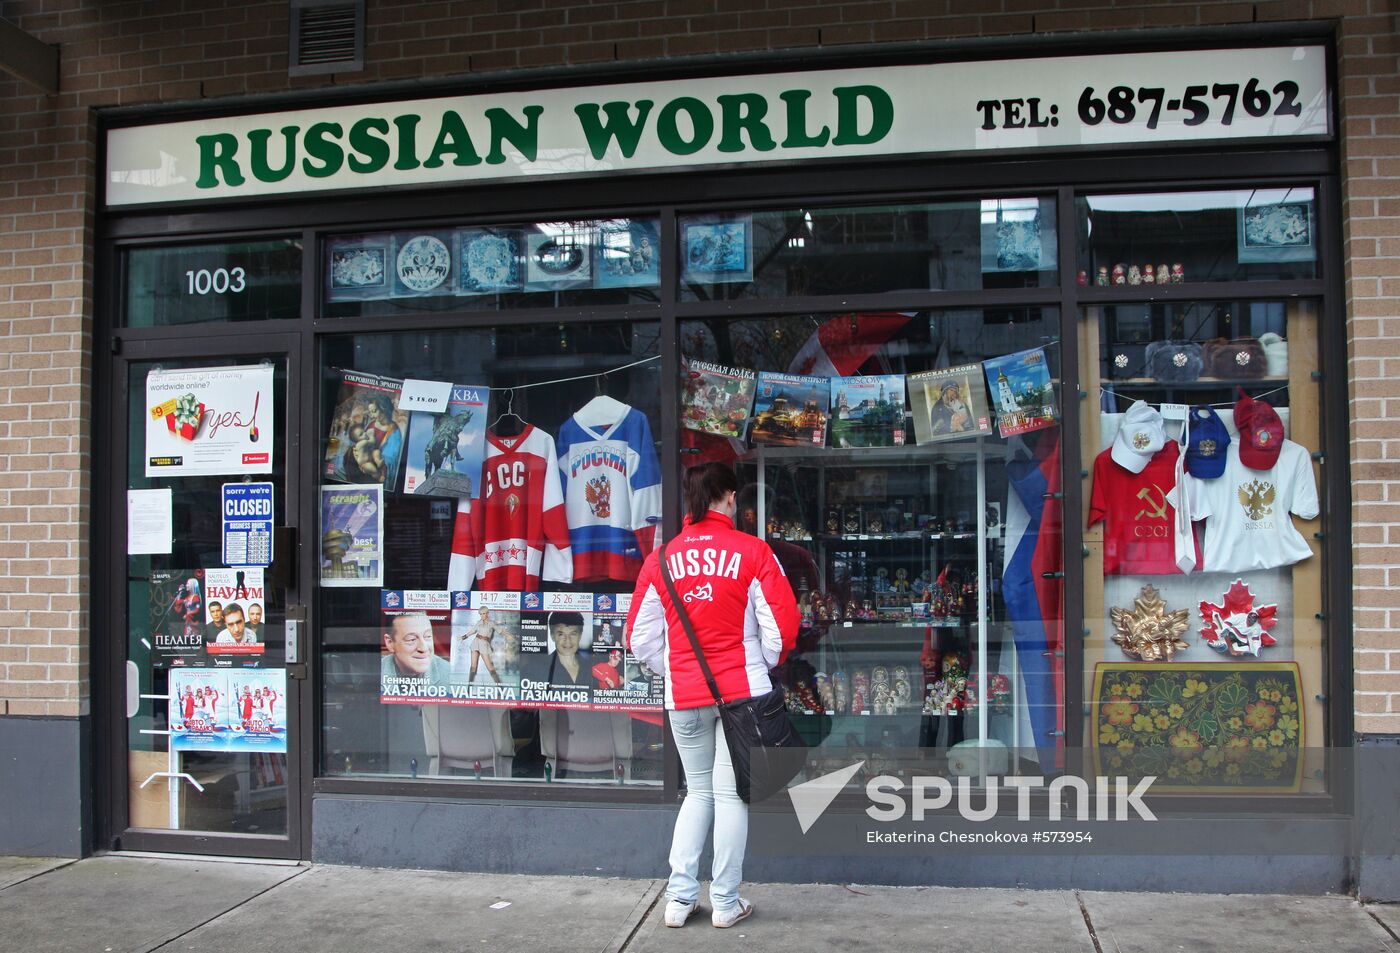 Russian World shop